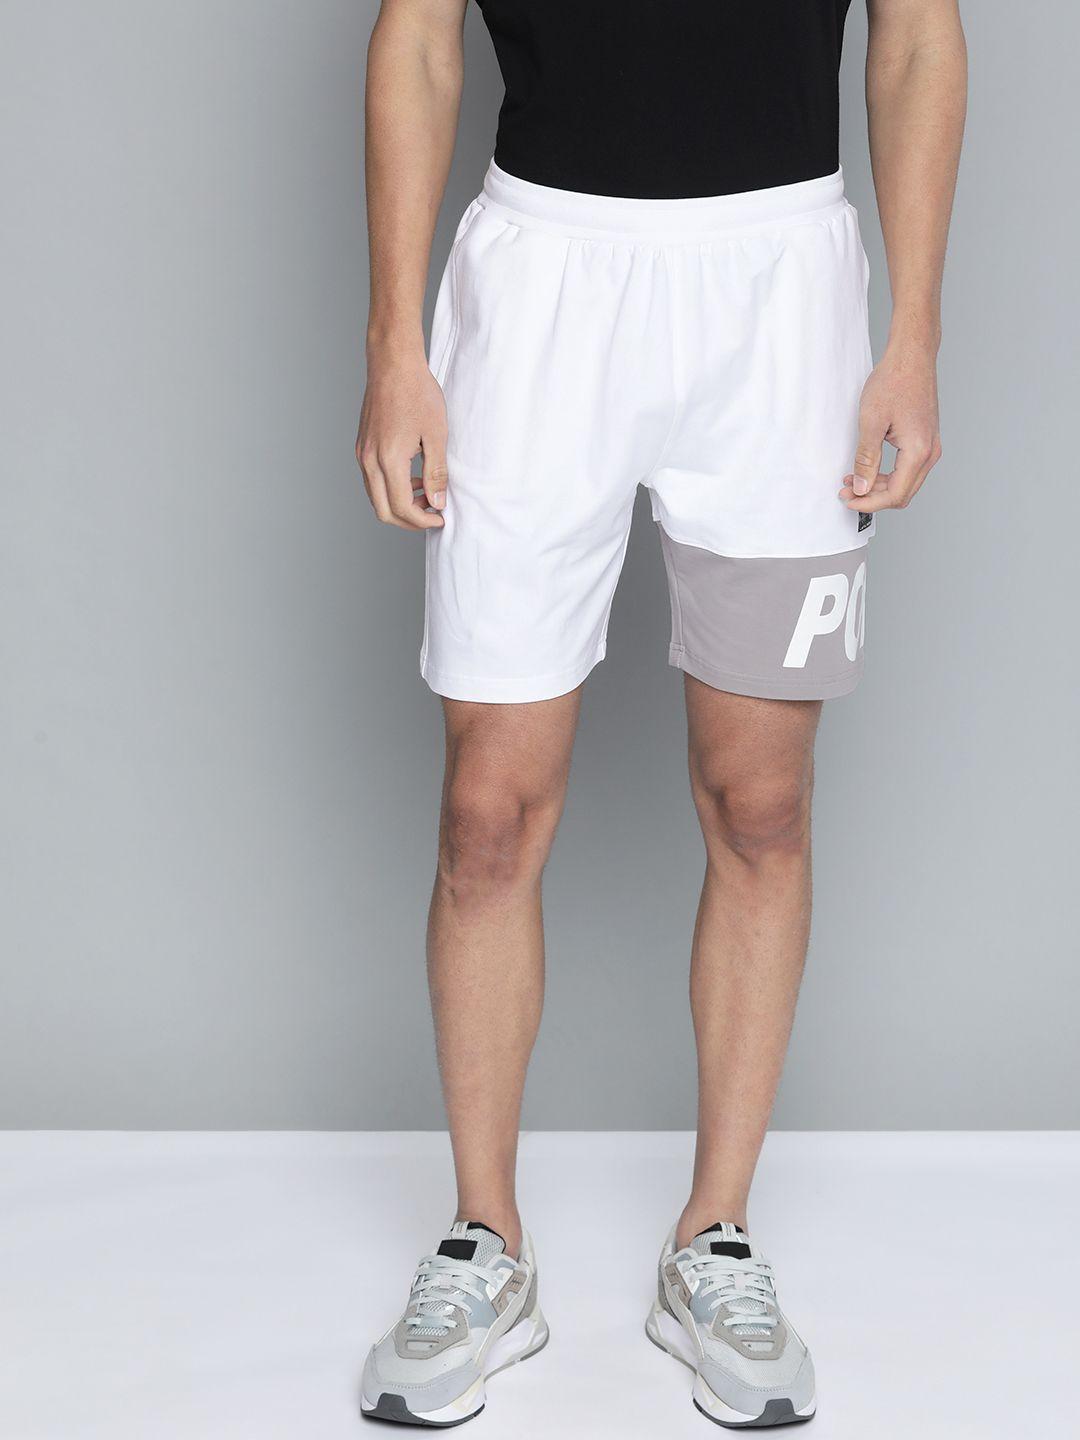 hrx-by-hrithik-roshan-lifestyle-men-optic-white-&-wet-weather-lycra-typography-shorts